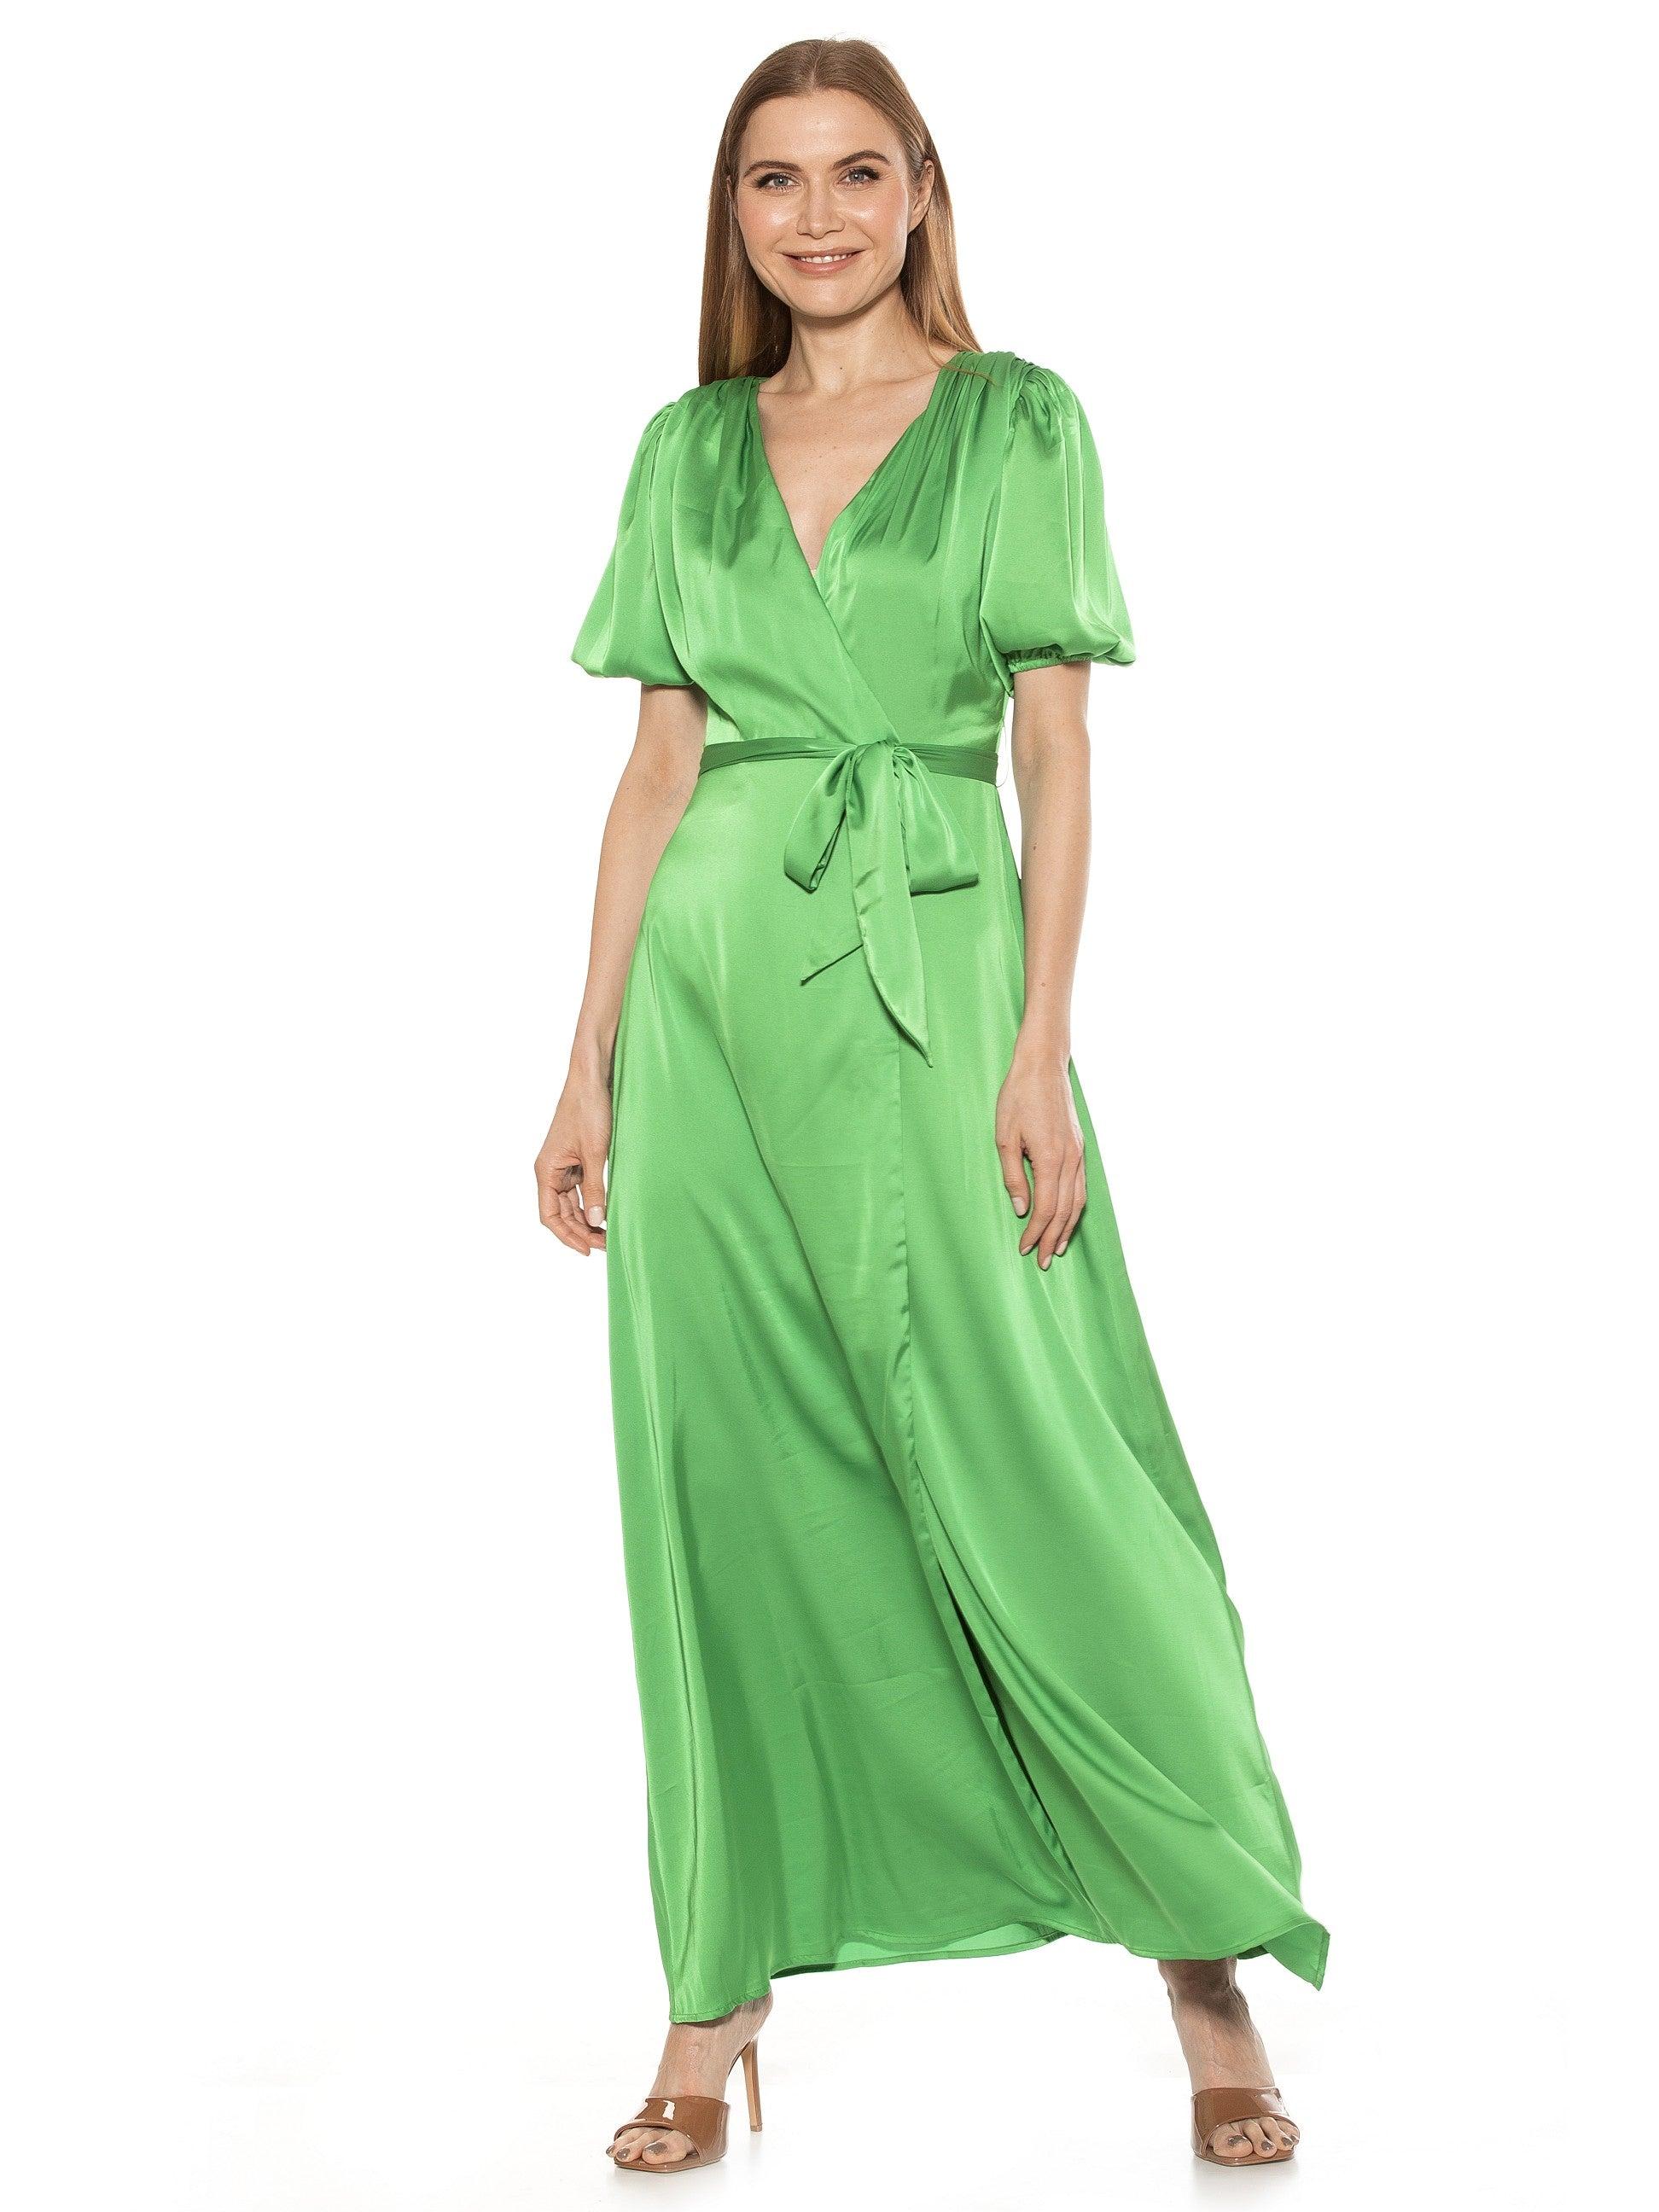 Alexia Admor Mikayla Maxi Dress In Green Lyst 